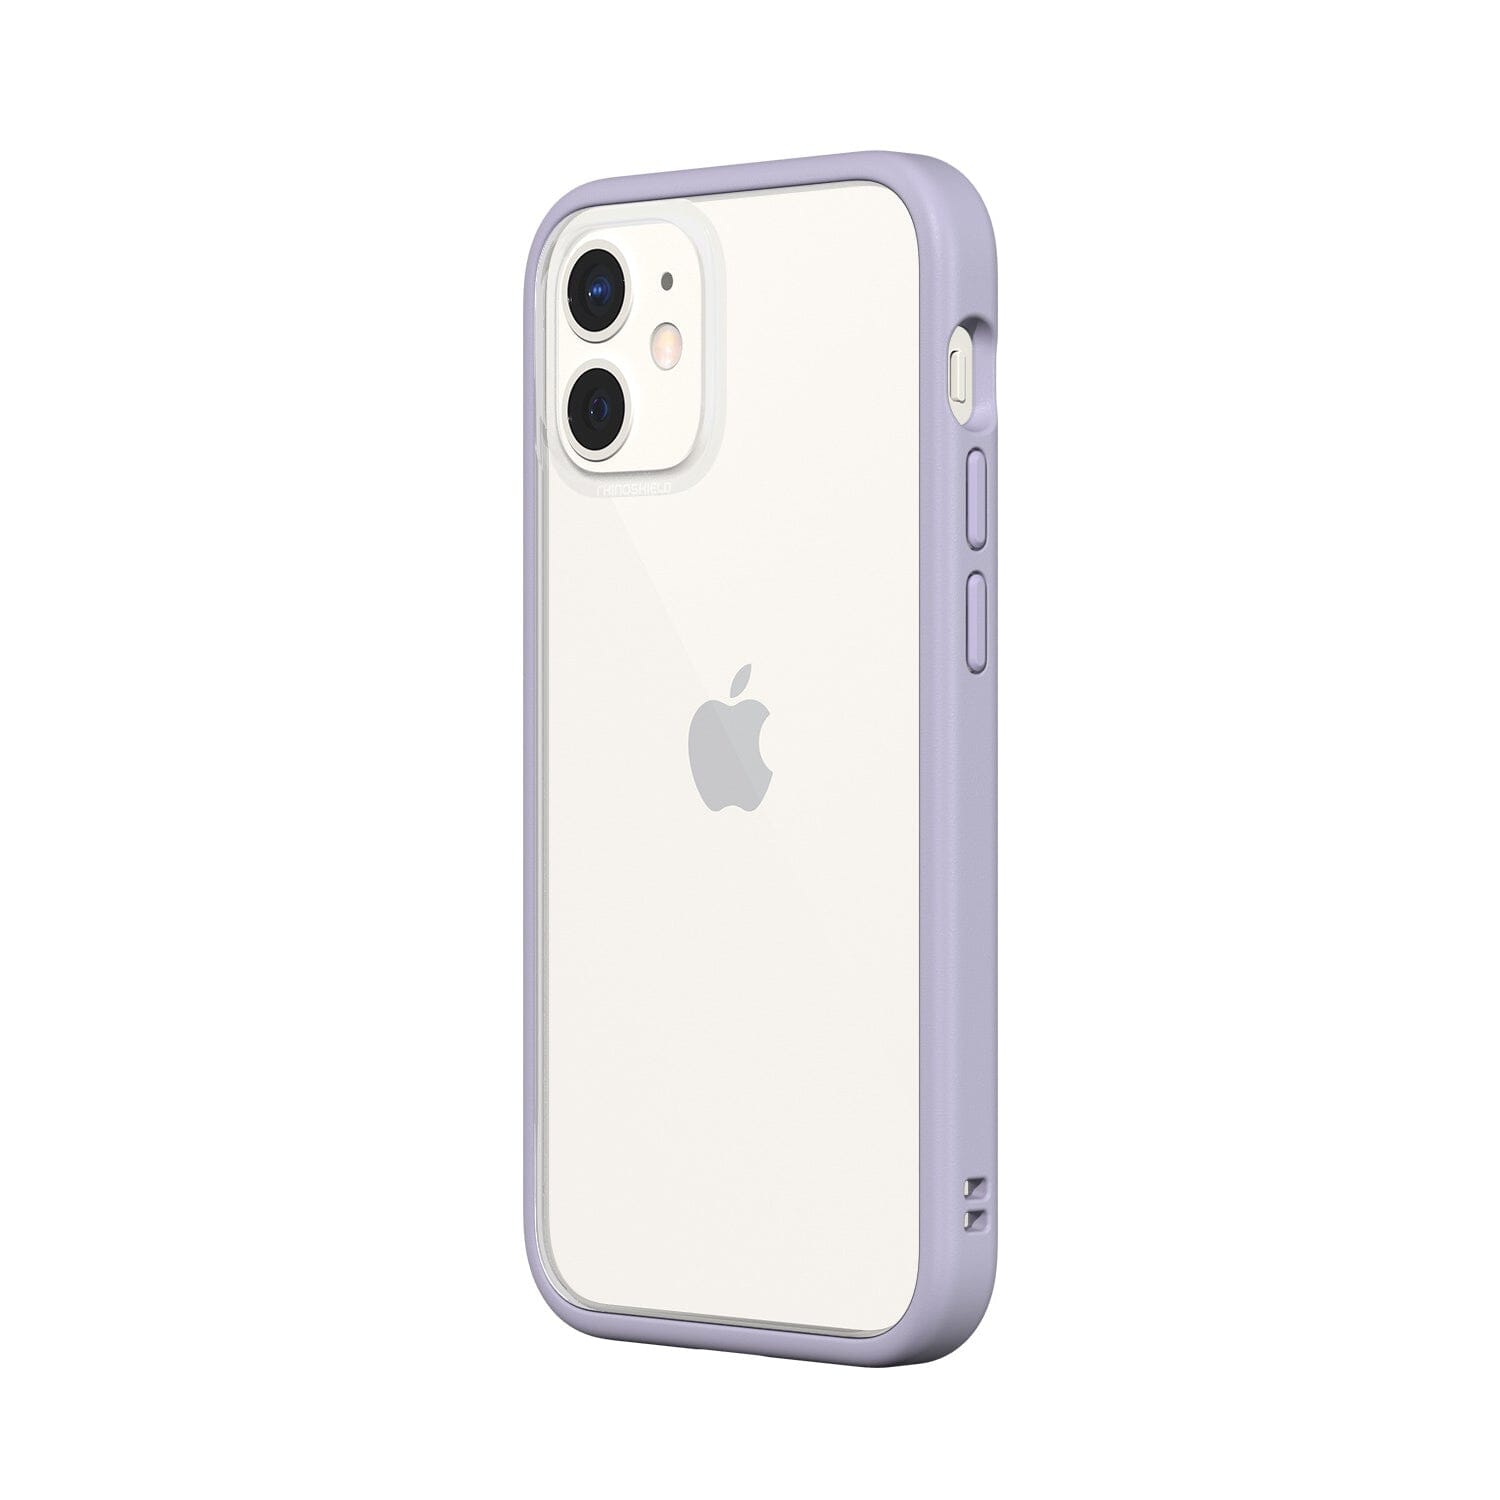 RhinoShield Mod NX Modular Case for iPhone 12 Series (2020) iPhone 12 Series RhinoShield iPhone 12 mini 5.4" Lavender 